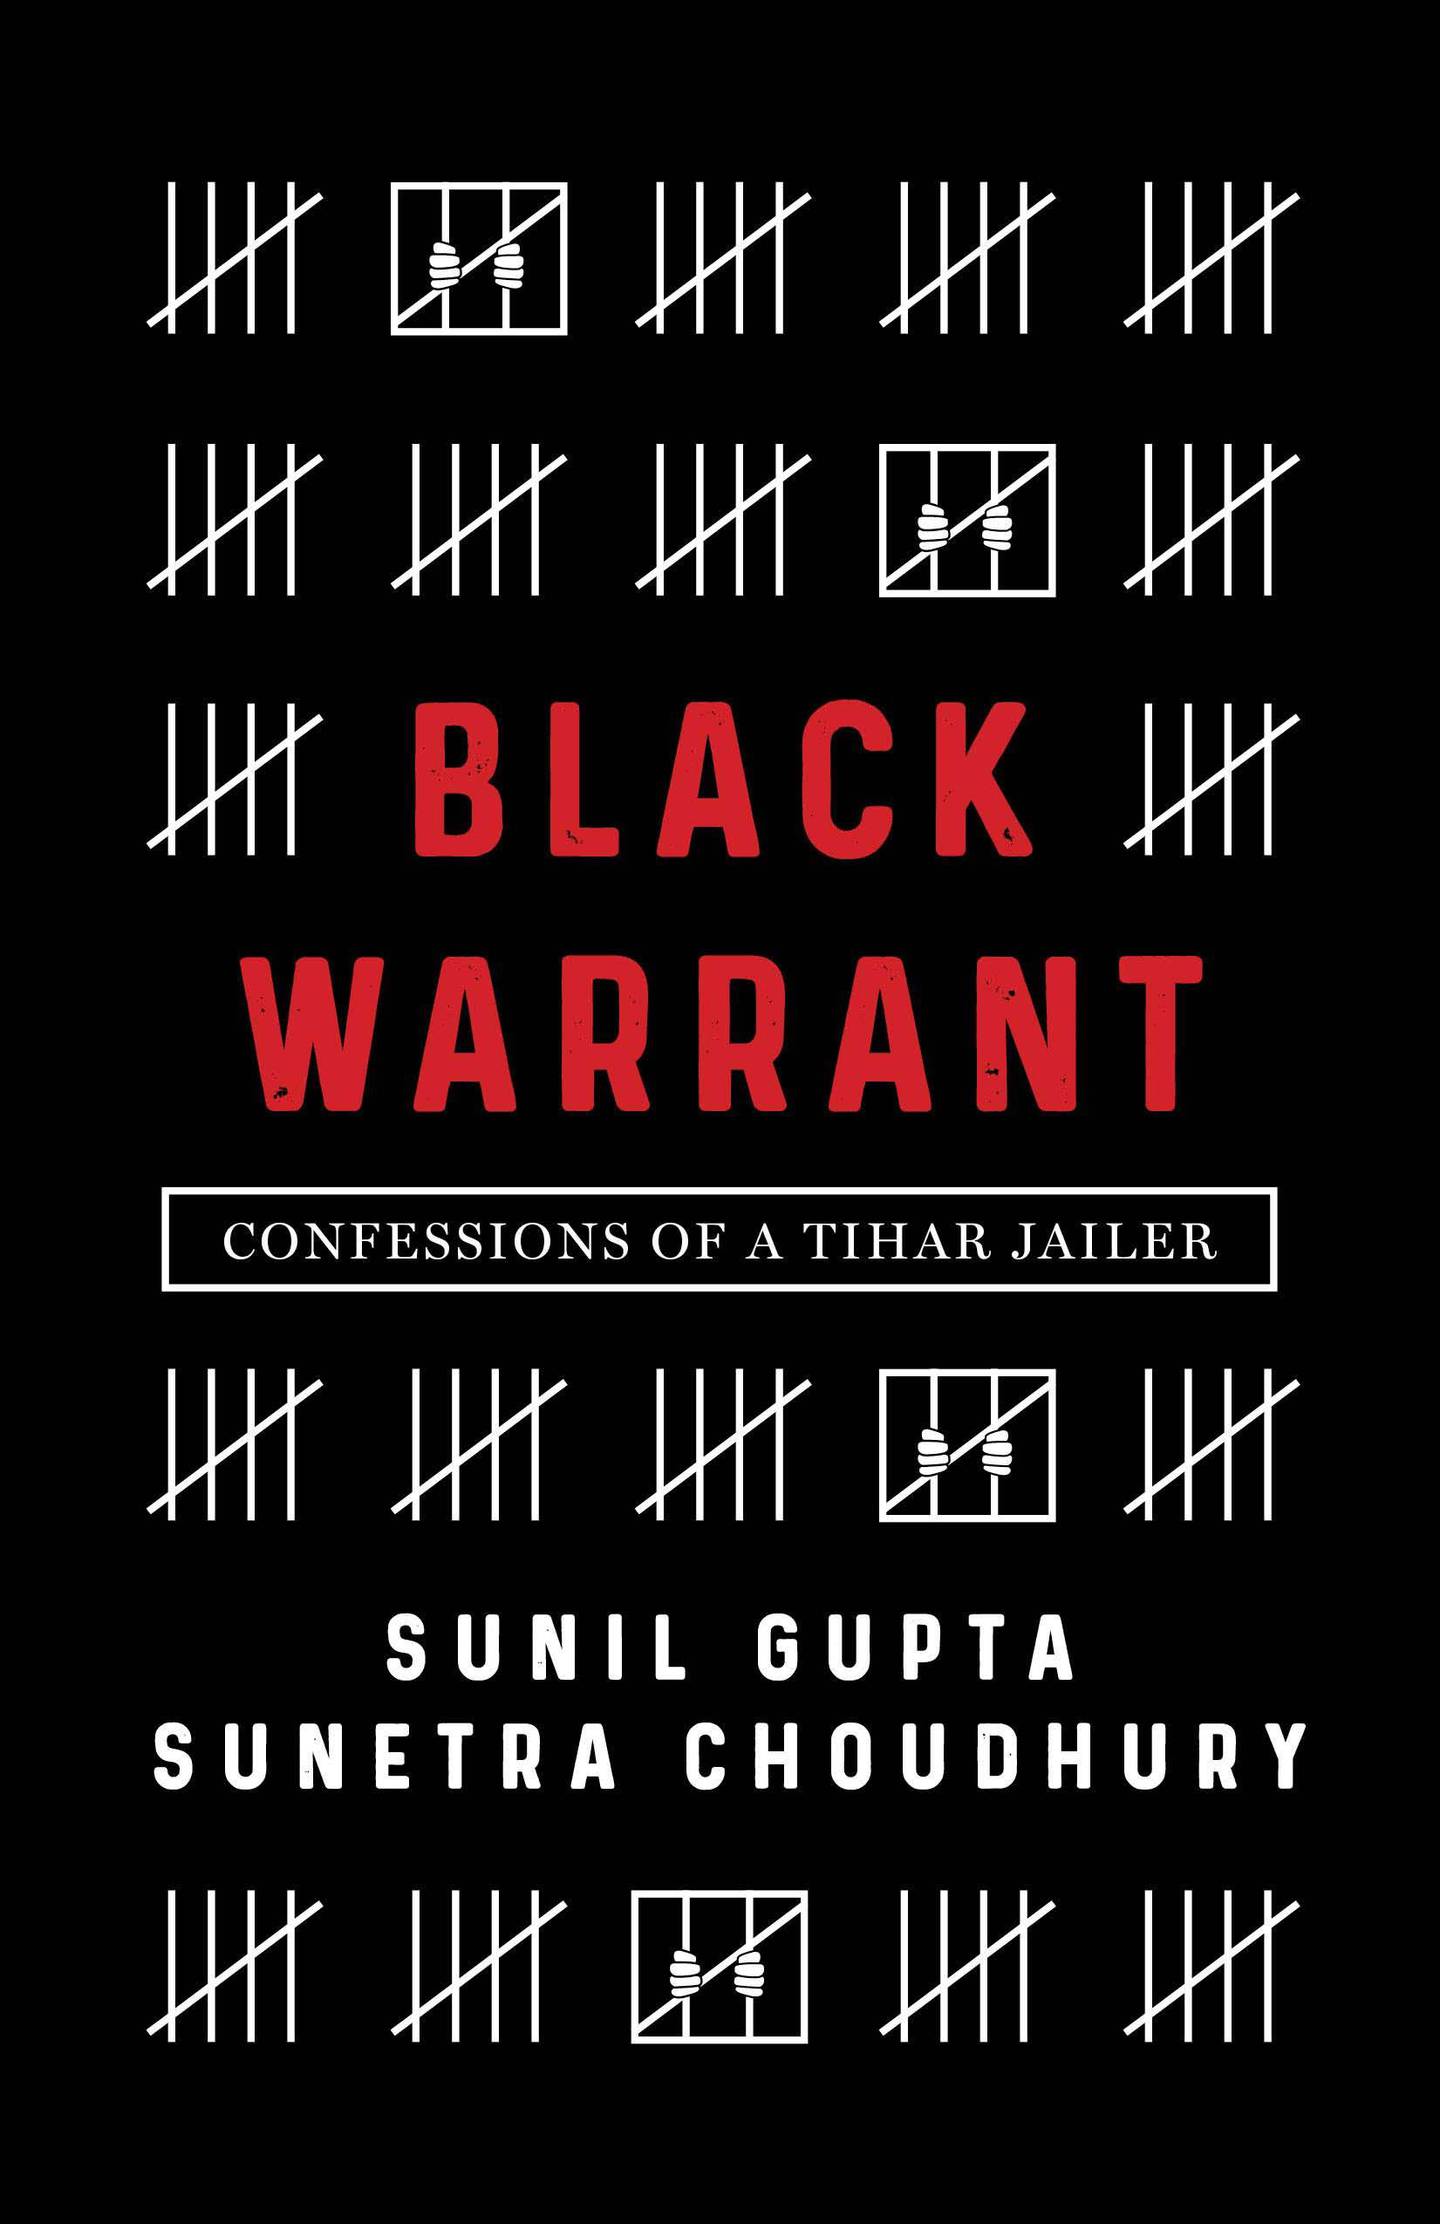 Black Warrant: Confessions of a Tihar Jailer by Sunil Gupta. Courtesy Roli Books